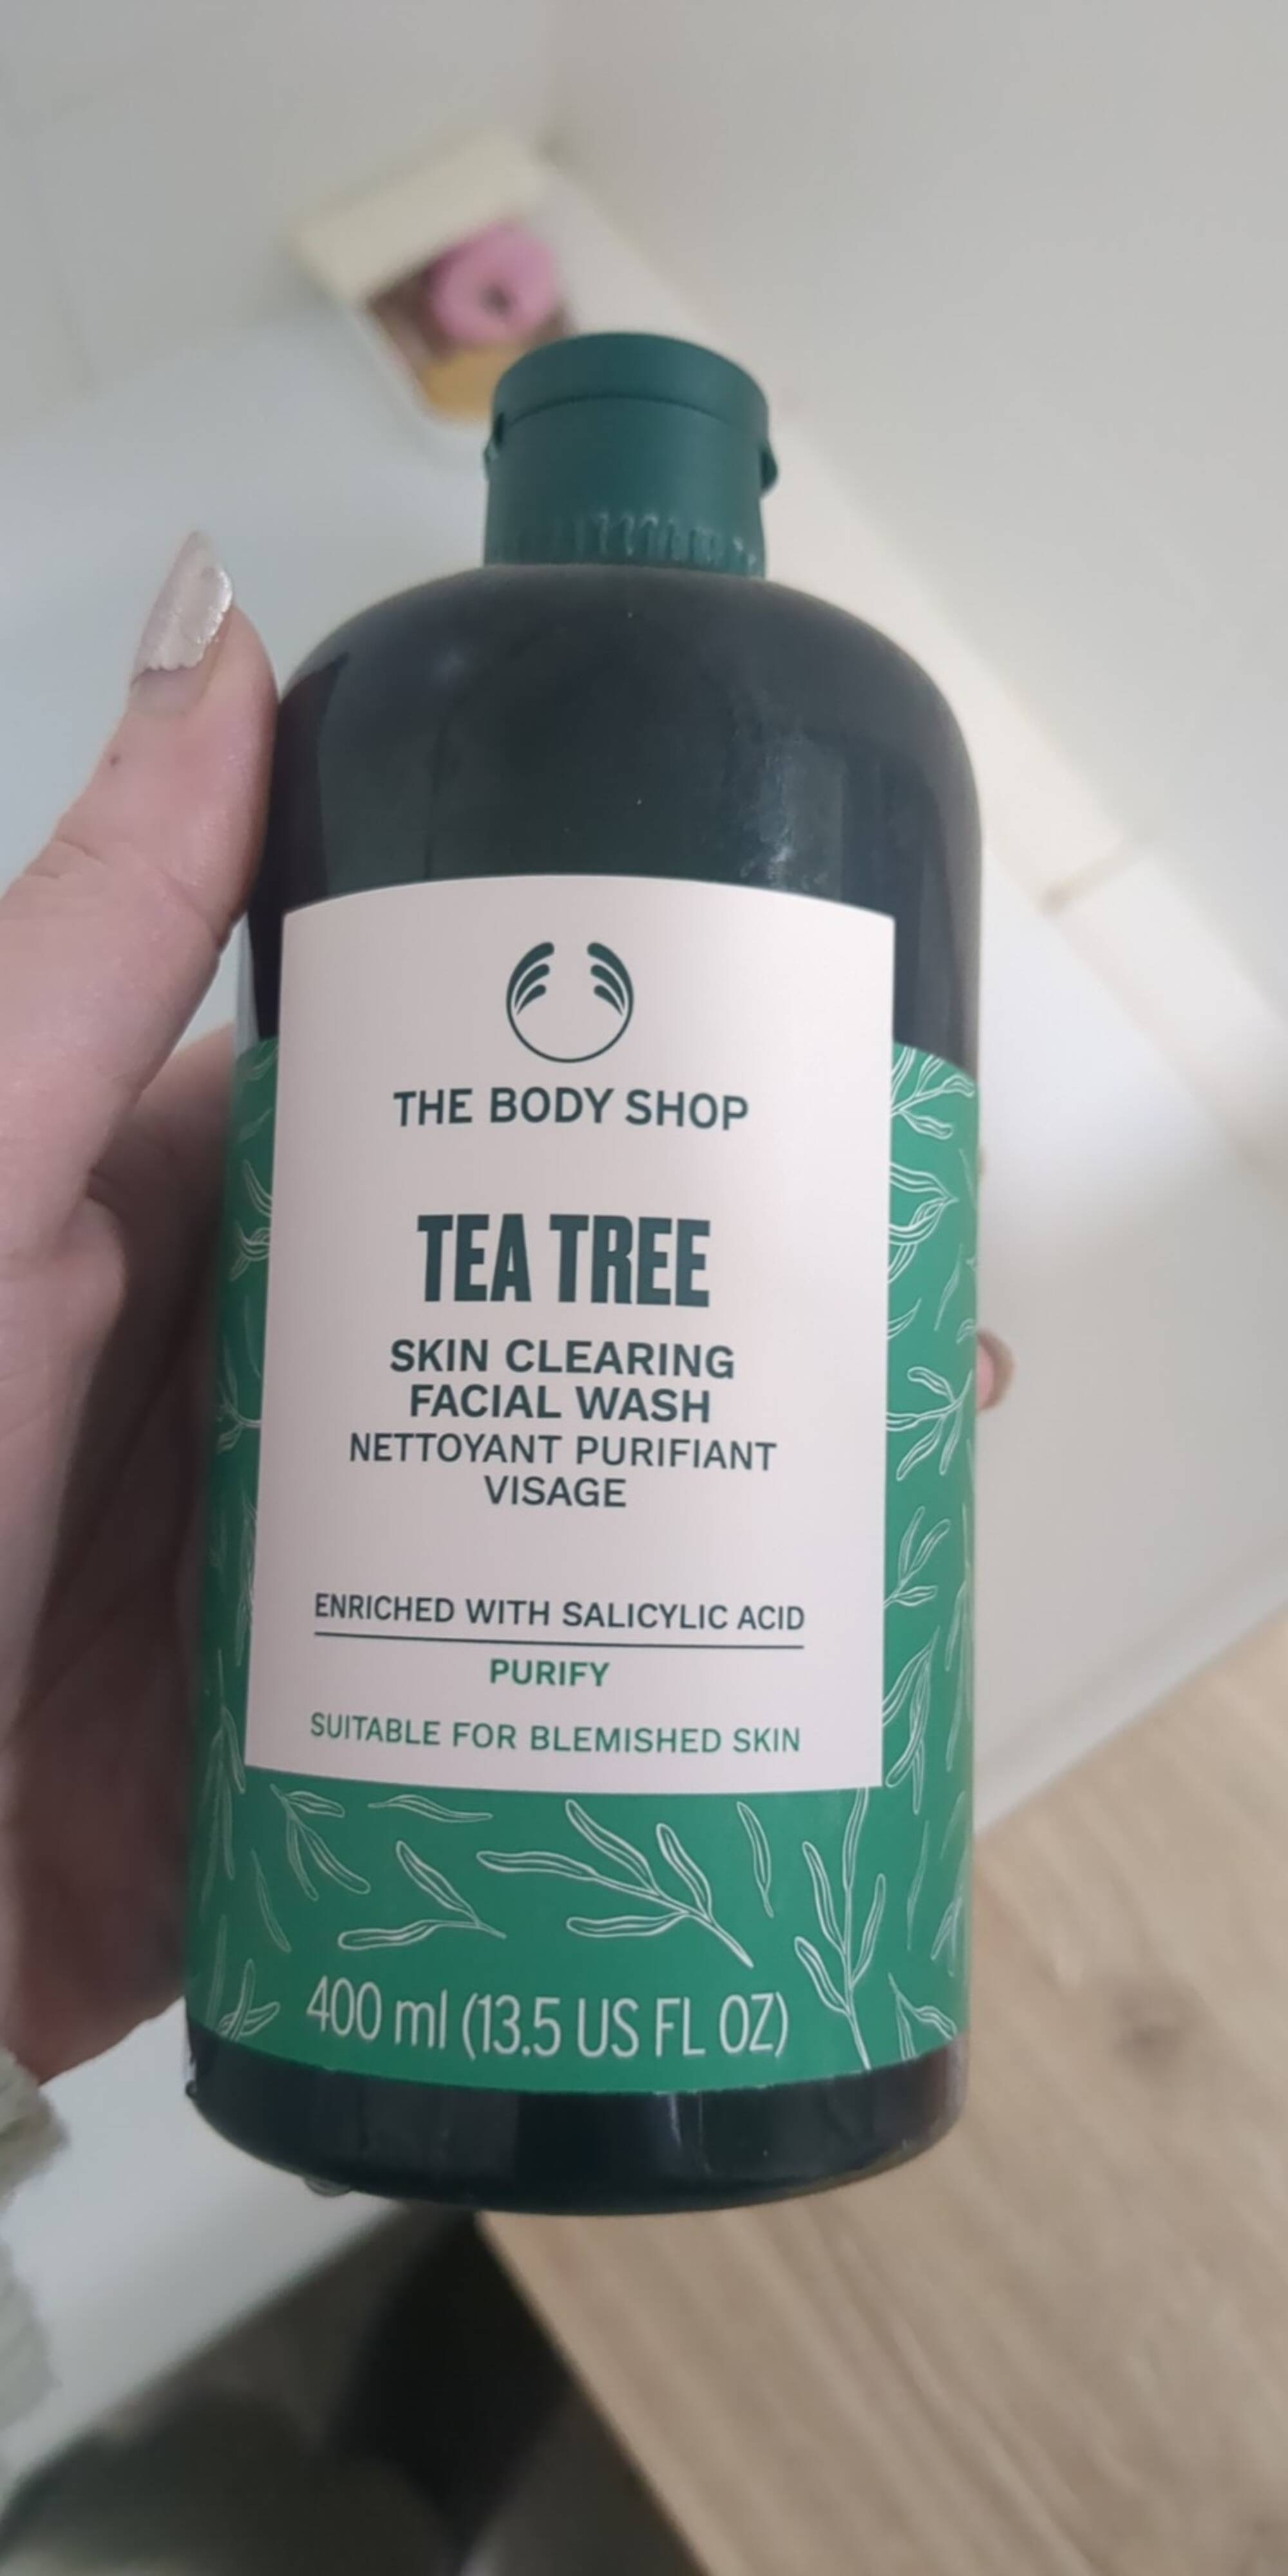 THE BODY SHOP - Tea tree - Nettoyant purifiant visage